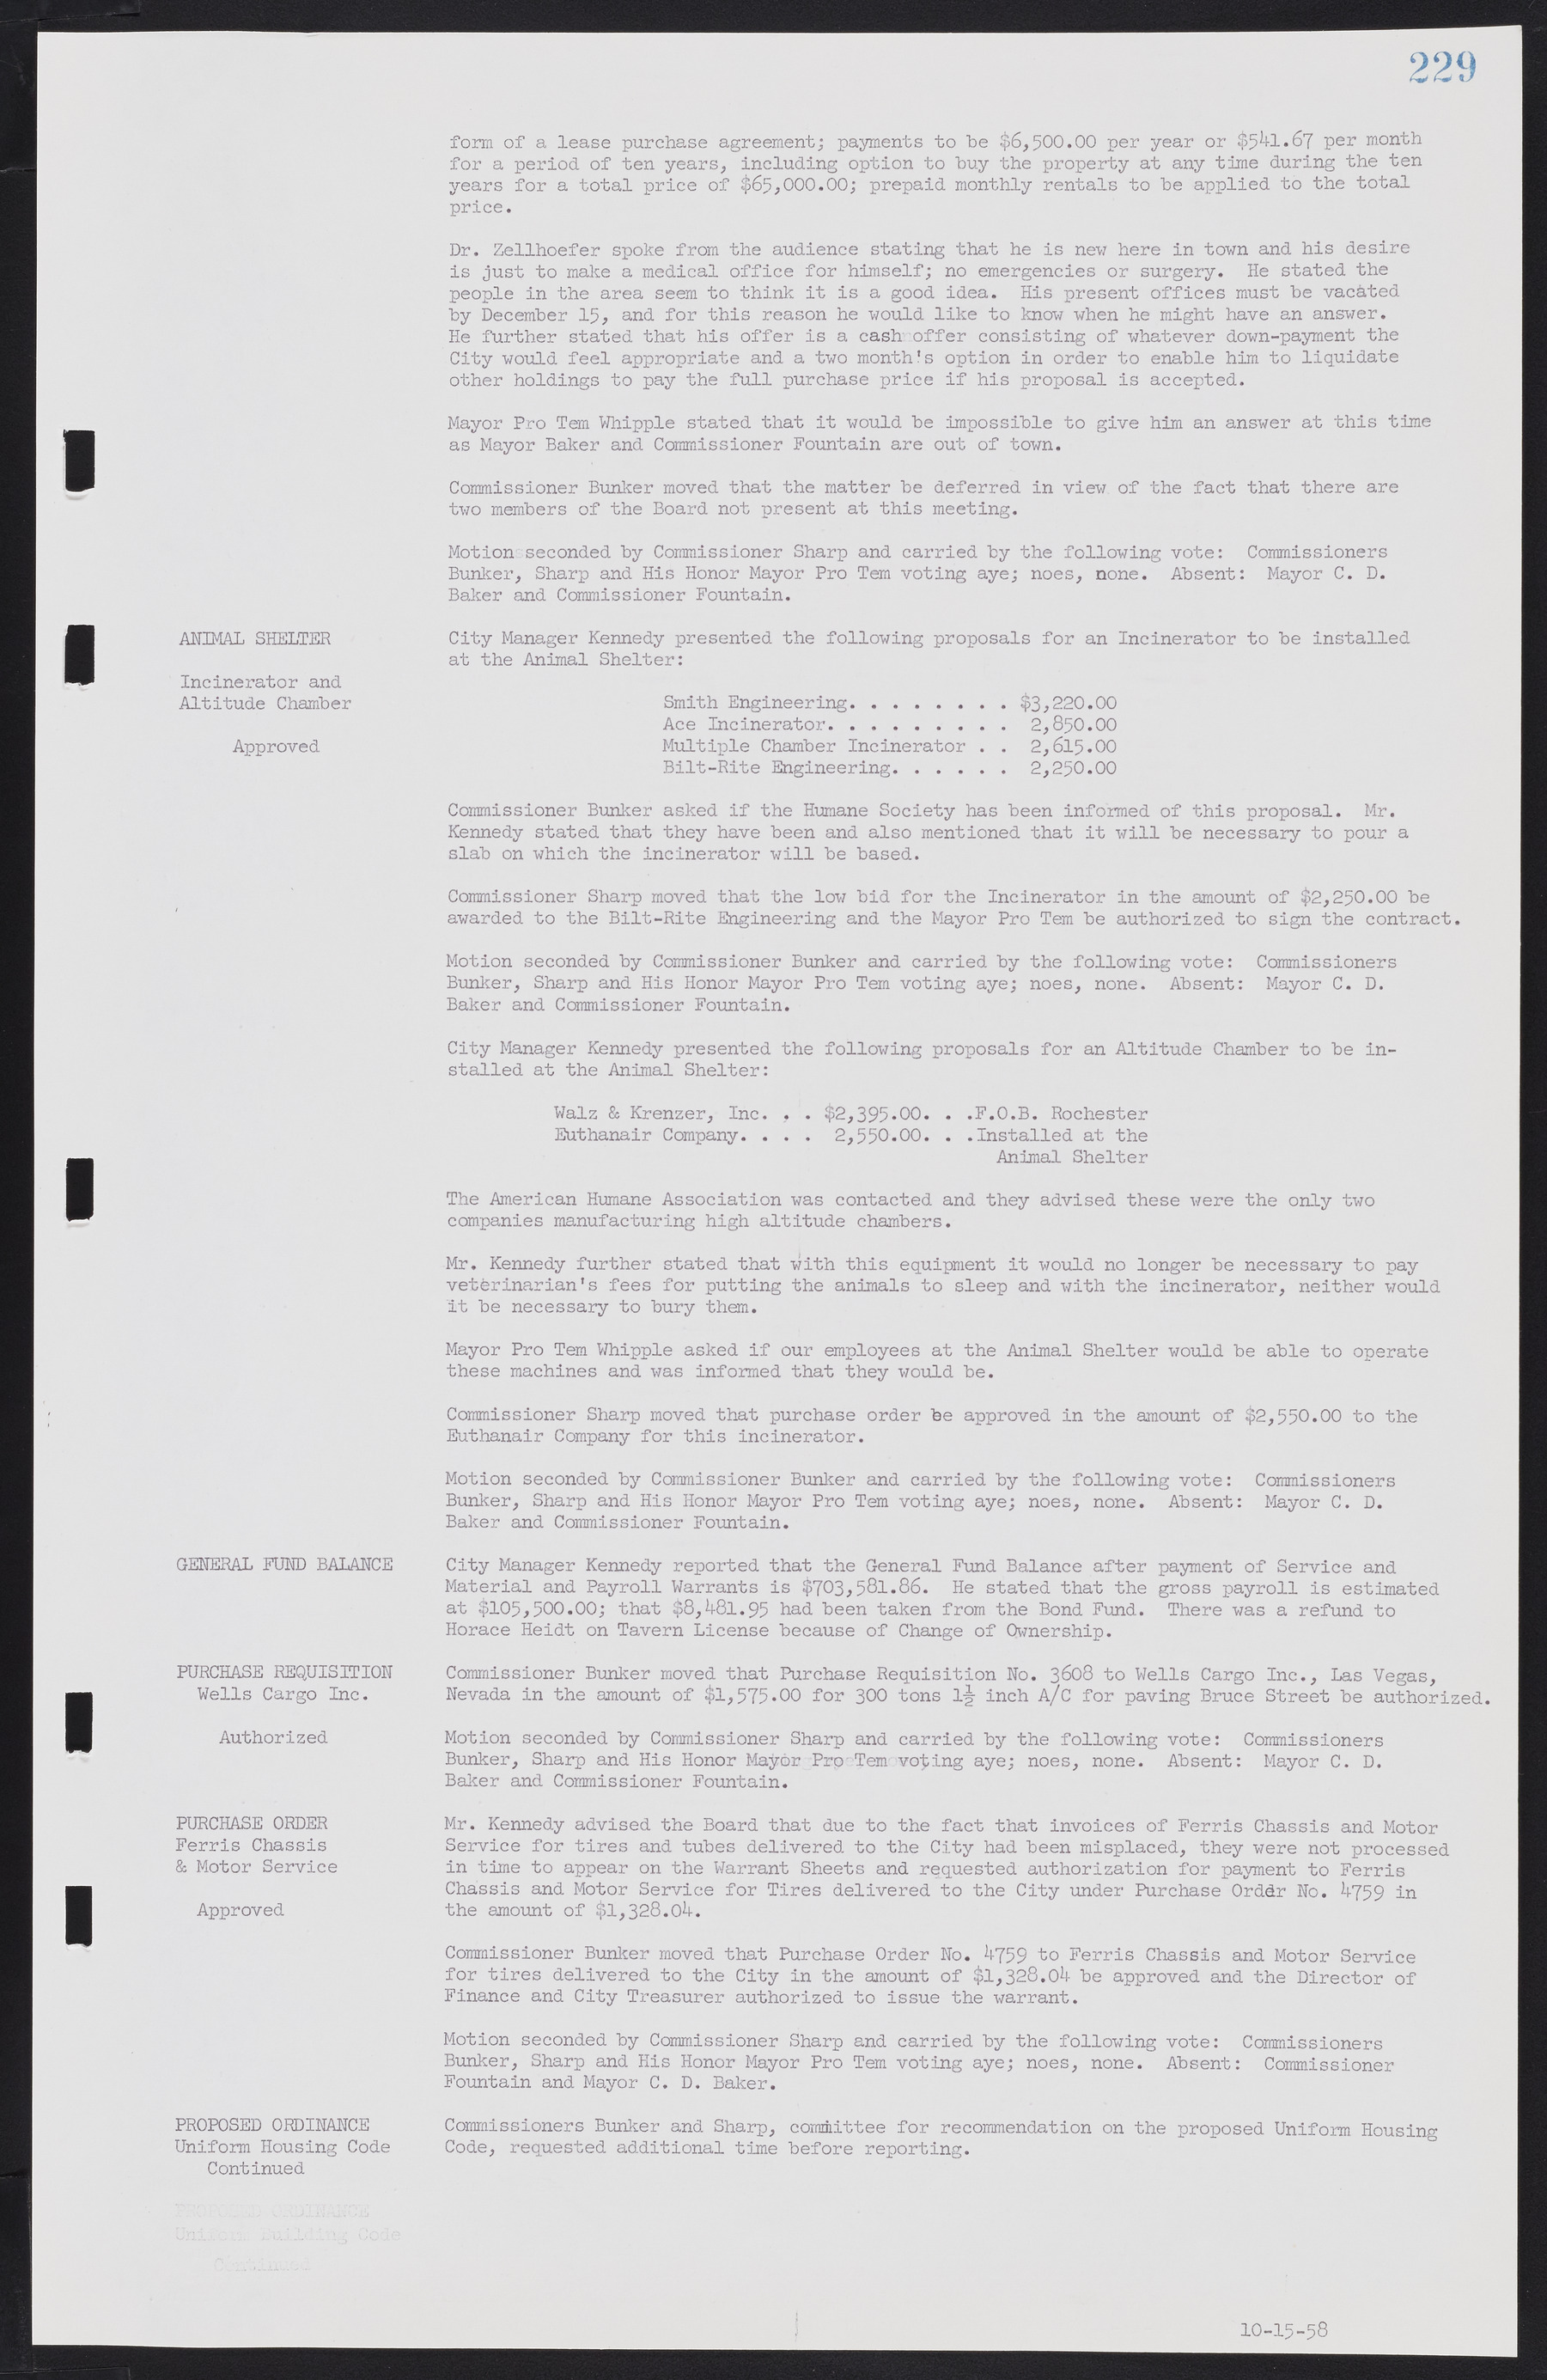 Las Vegas City Commission Minutes, November 20, 1957 to December 2, 1959, lvc000011-235